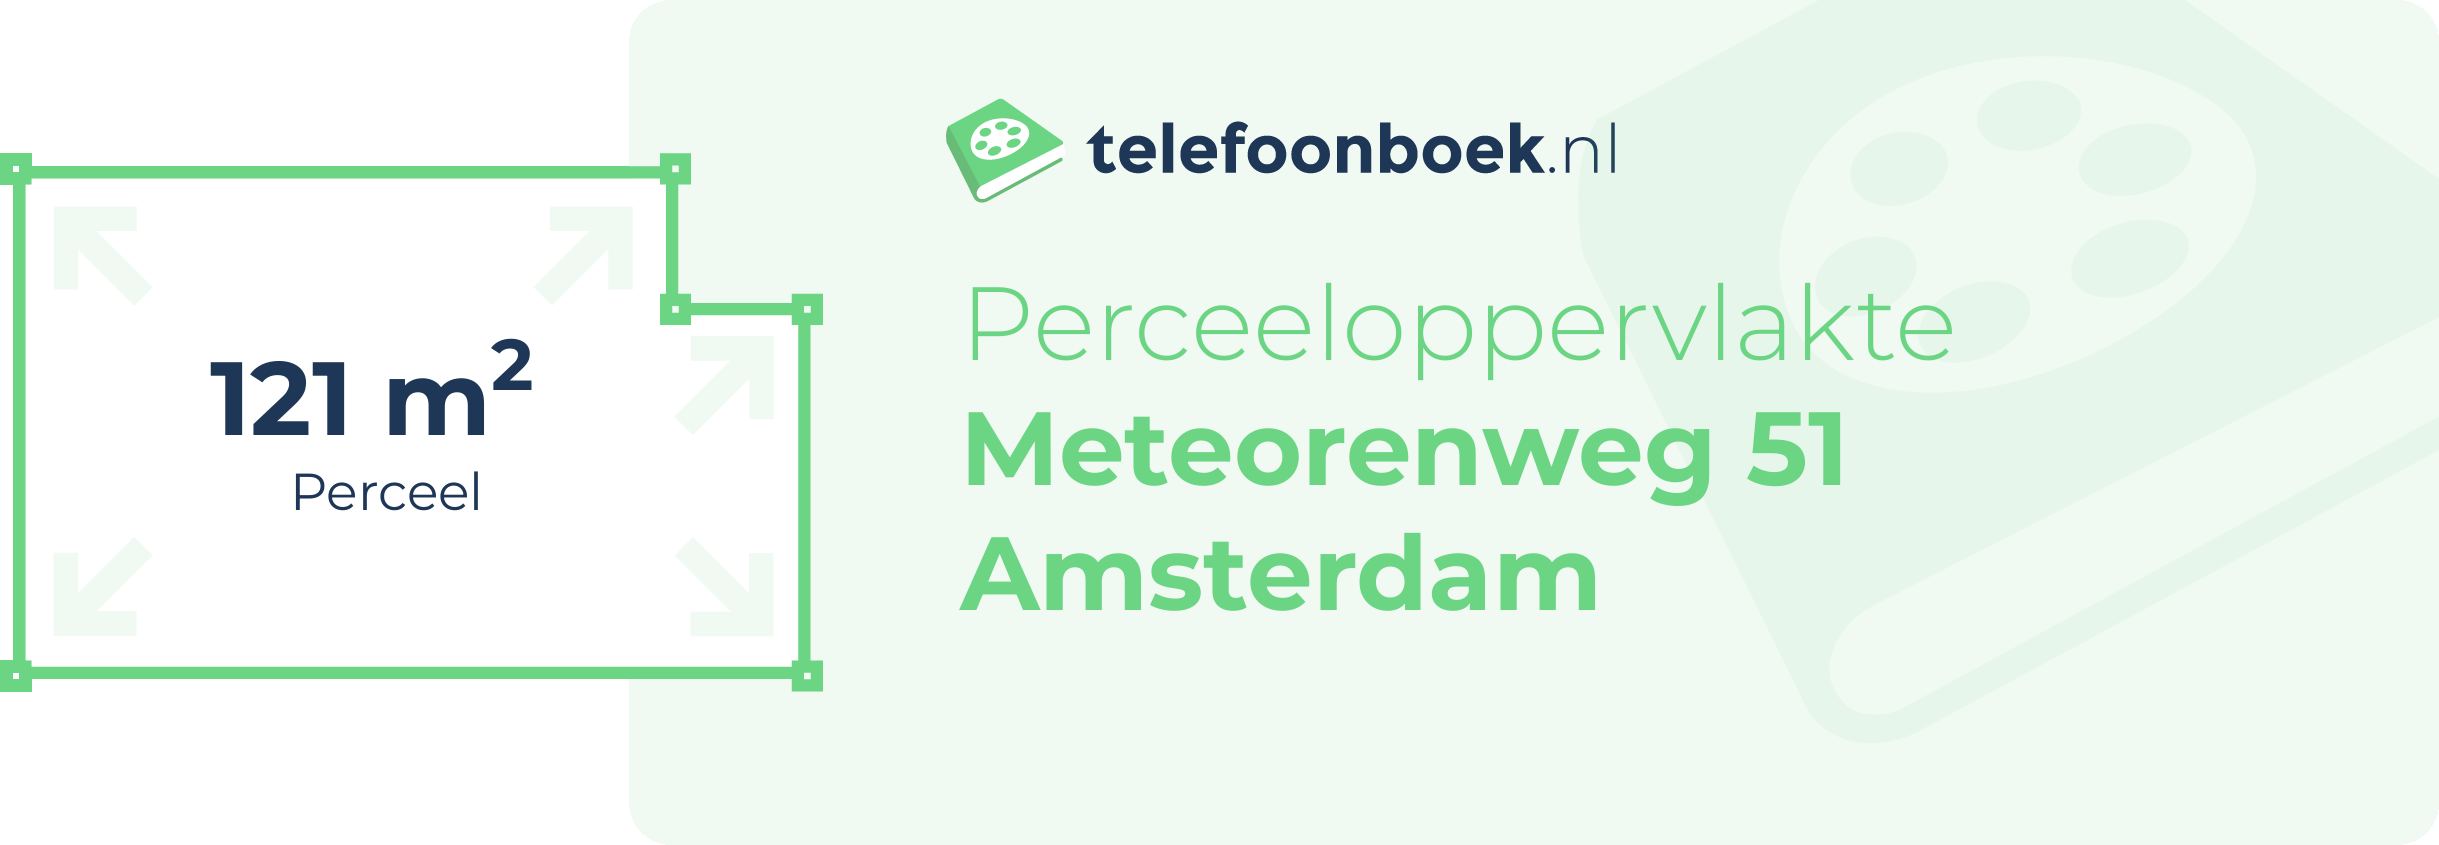 Perceeloppervlakte Meteorenweg 51 Amsterdam